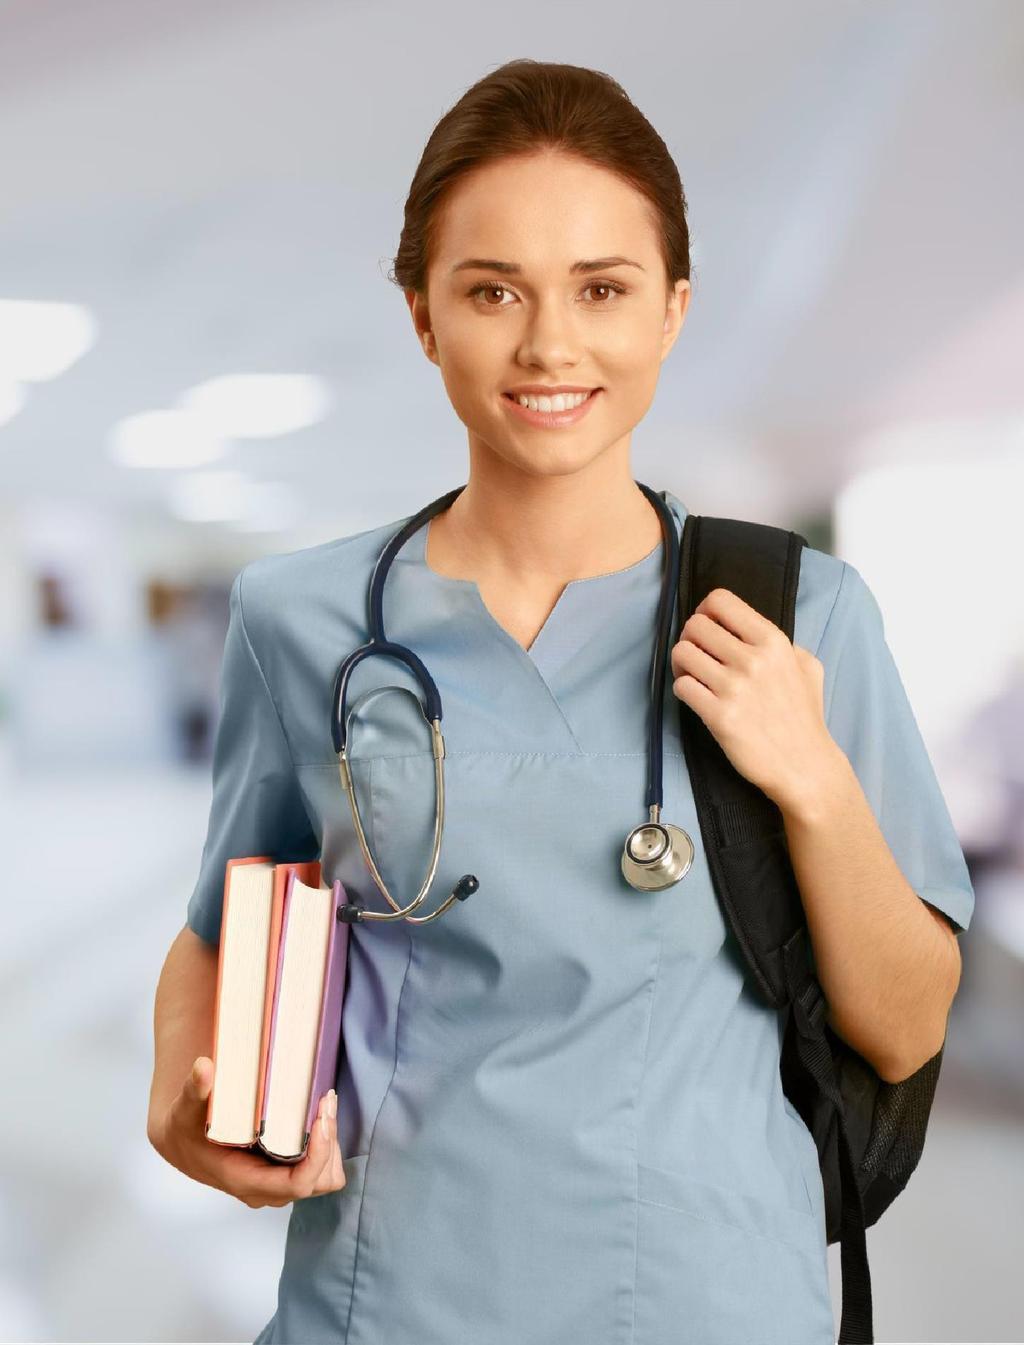 ACADEMIC PROGRAMS Felbry Colege of nursing currently offers the following nursing programs: The Practical Nursing Diploma Program, the LPN-RN Diploma Nursing Program, and the Associate of Applied